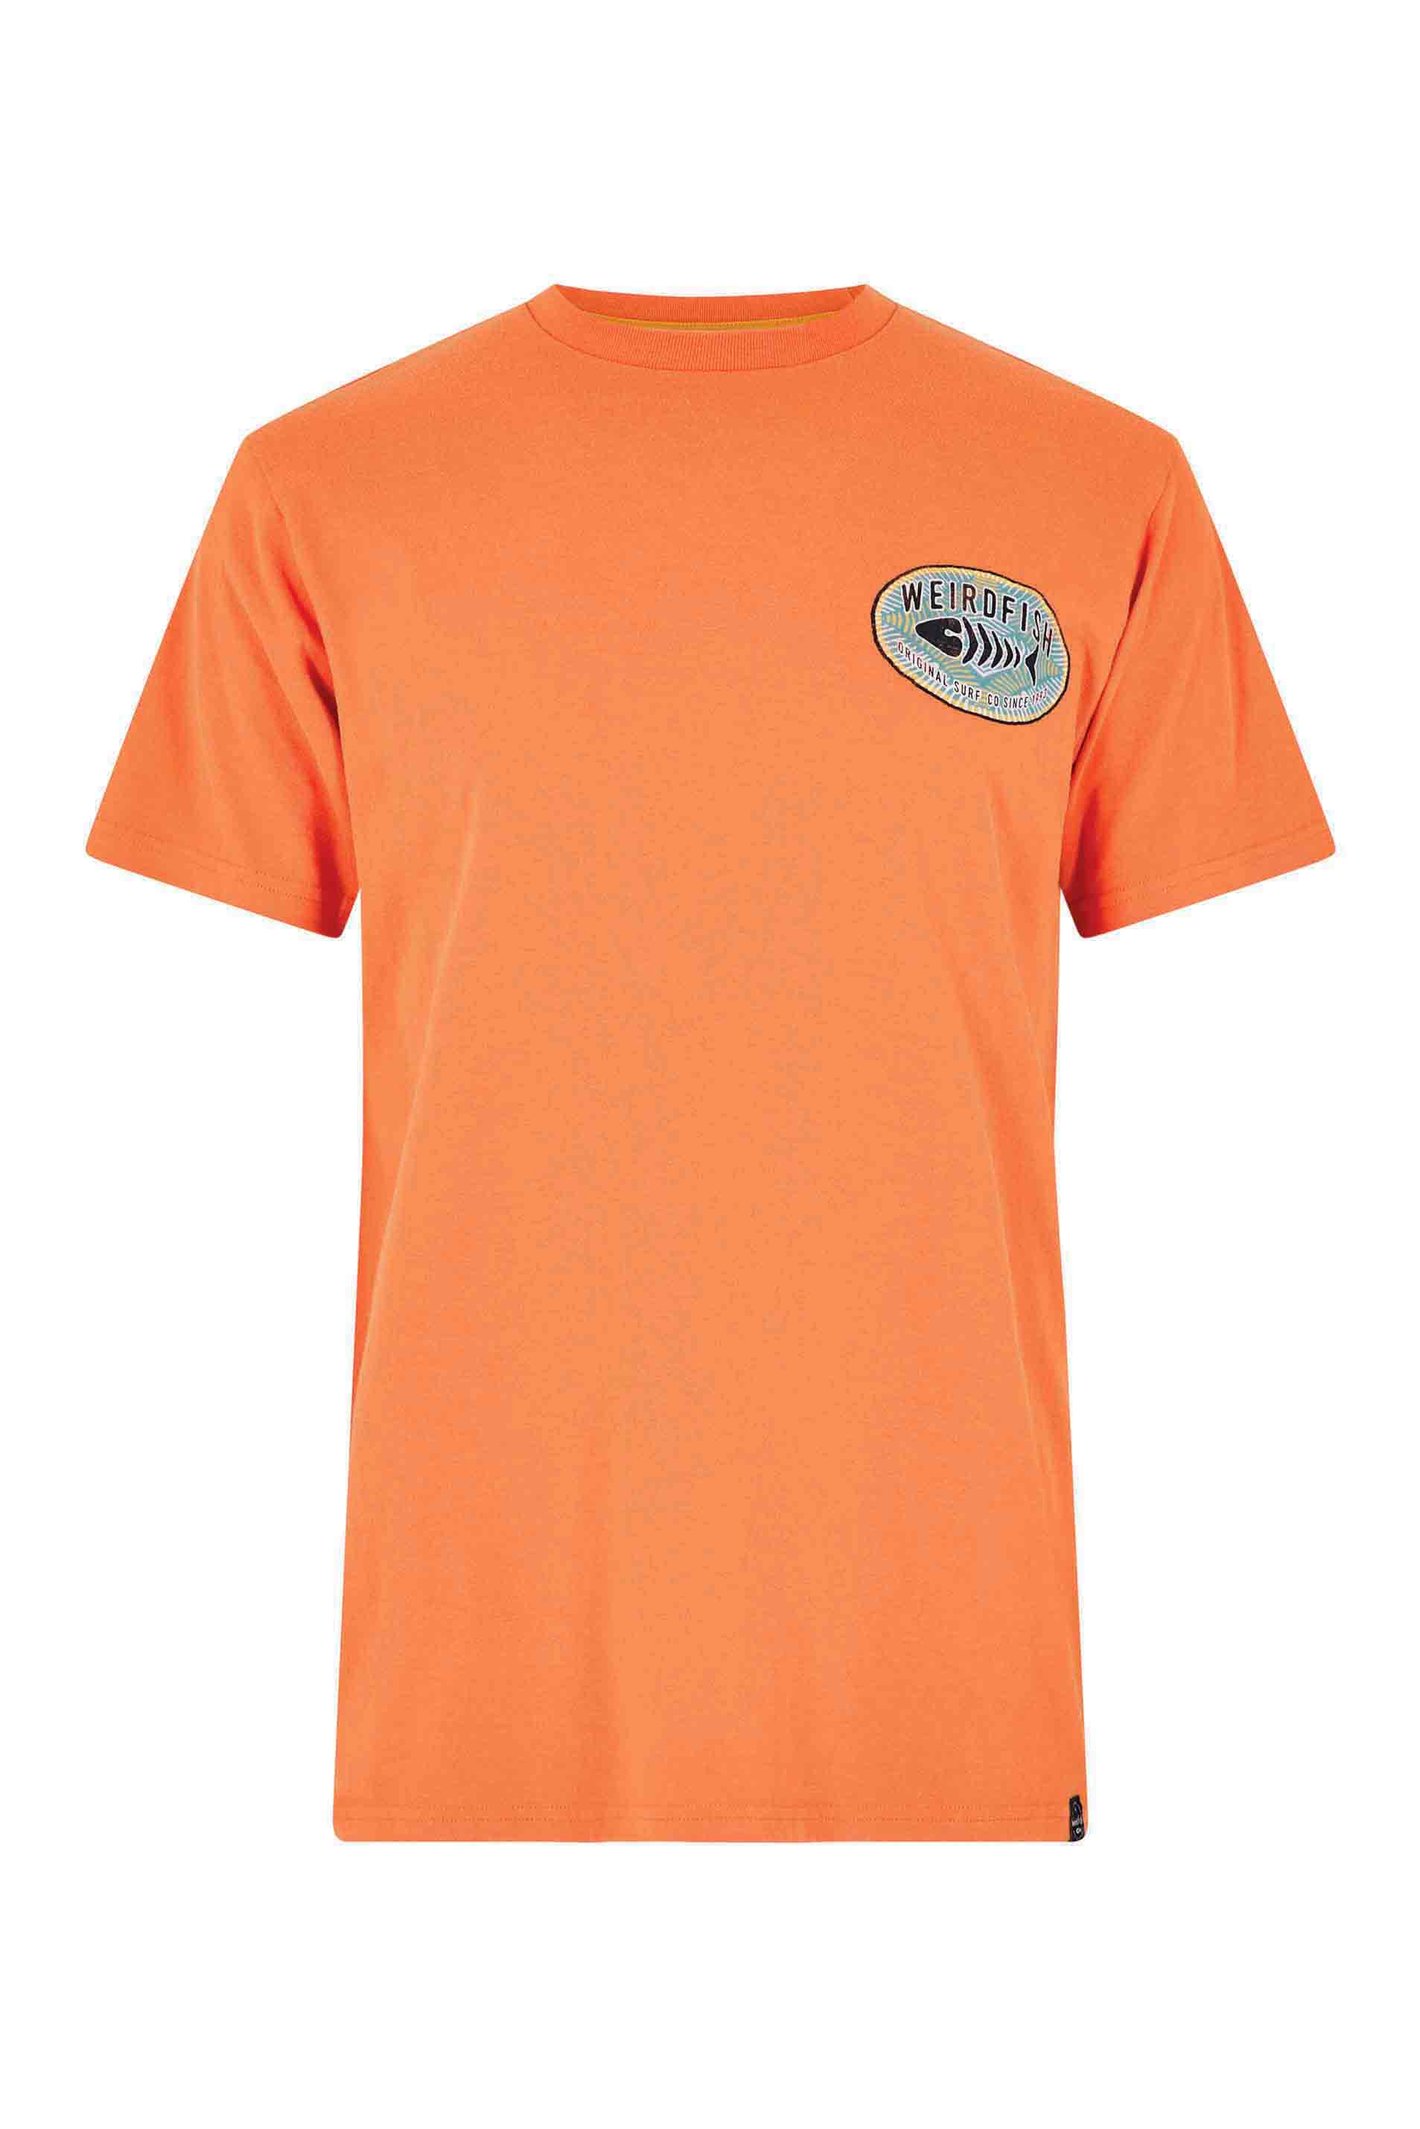 Weird Fish Original Surf Graphic T-Shirt Mango Size S